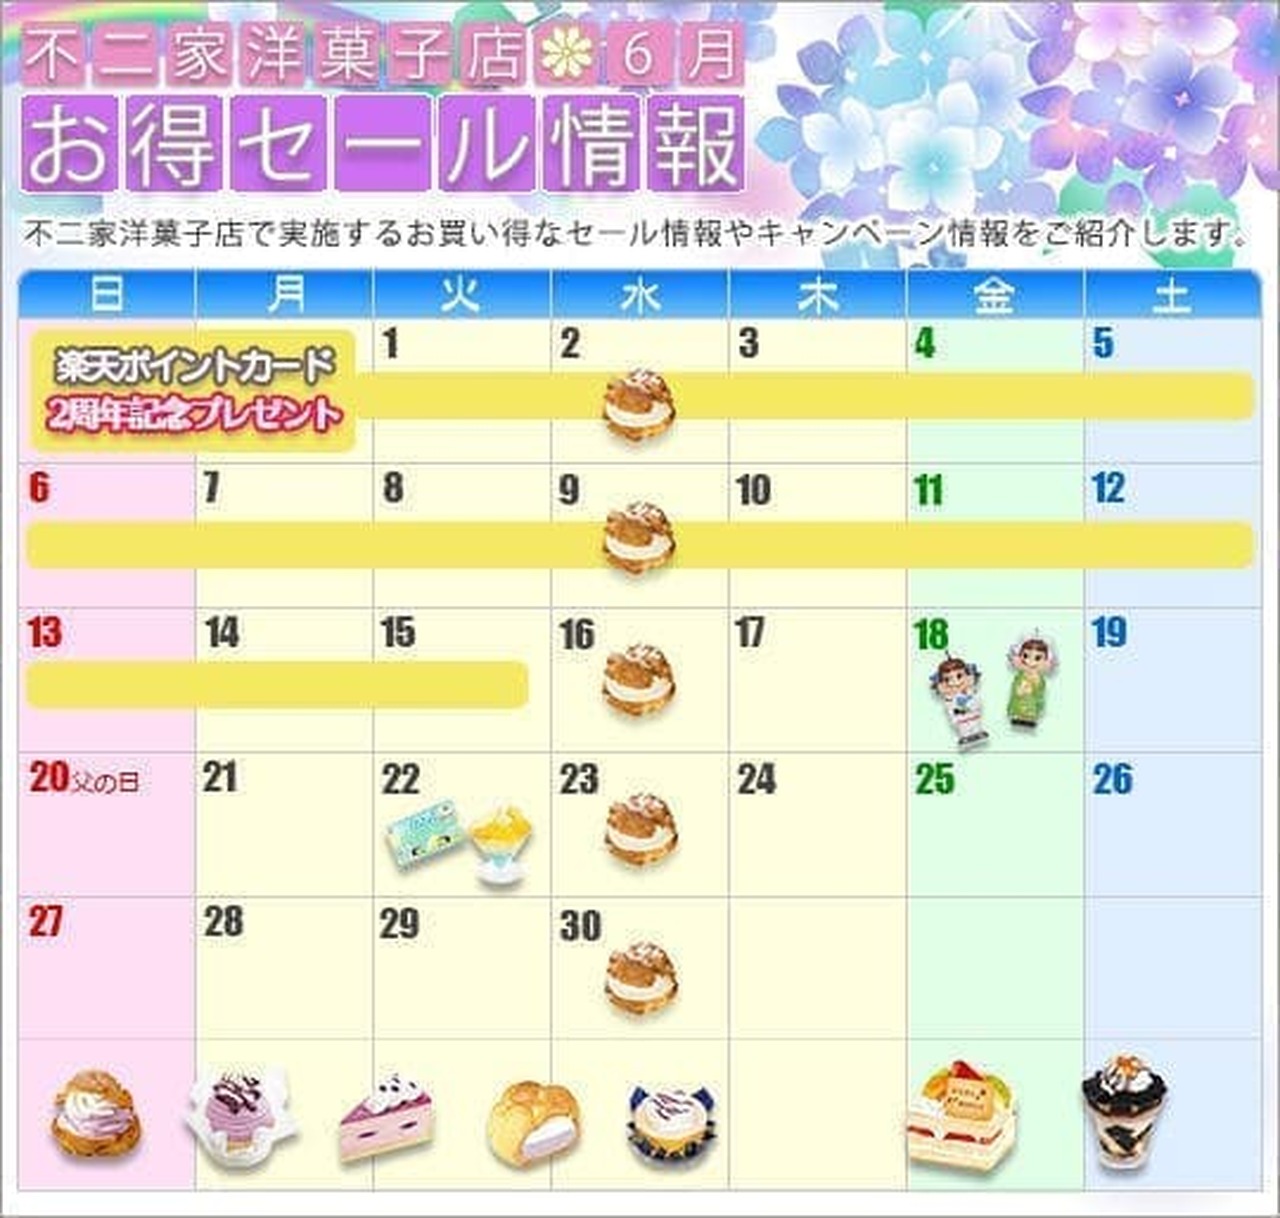 Fujiya pastry shop June sale information